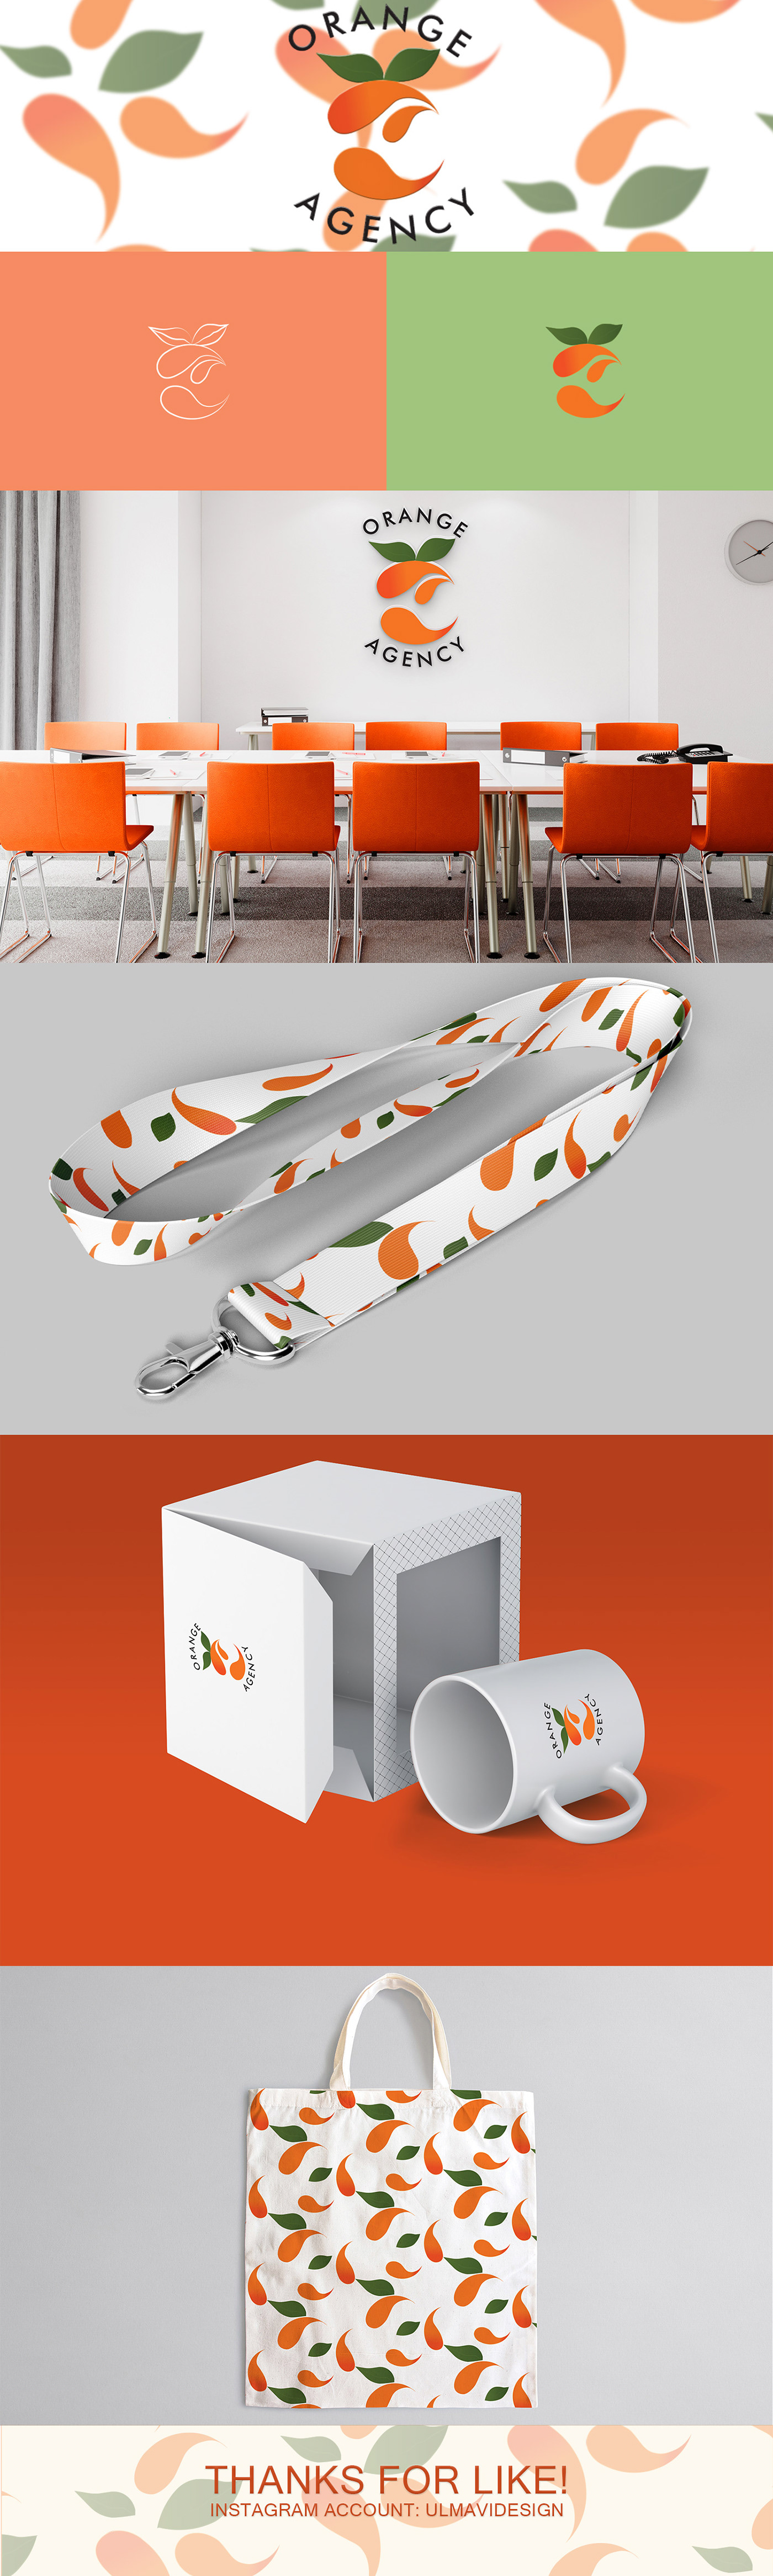 advertisement agency bag brending discoverne logo orange orangeagency orangecolor pattern